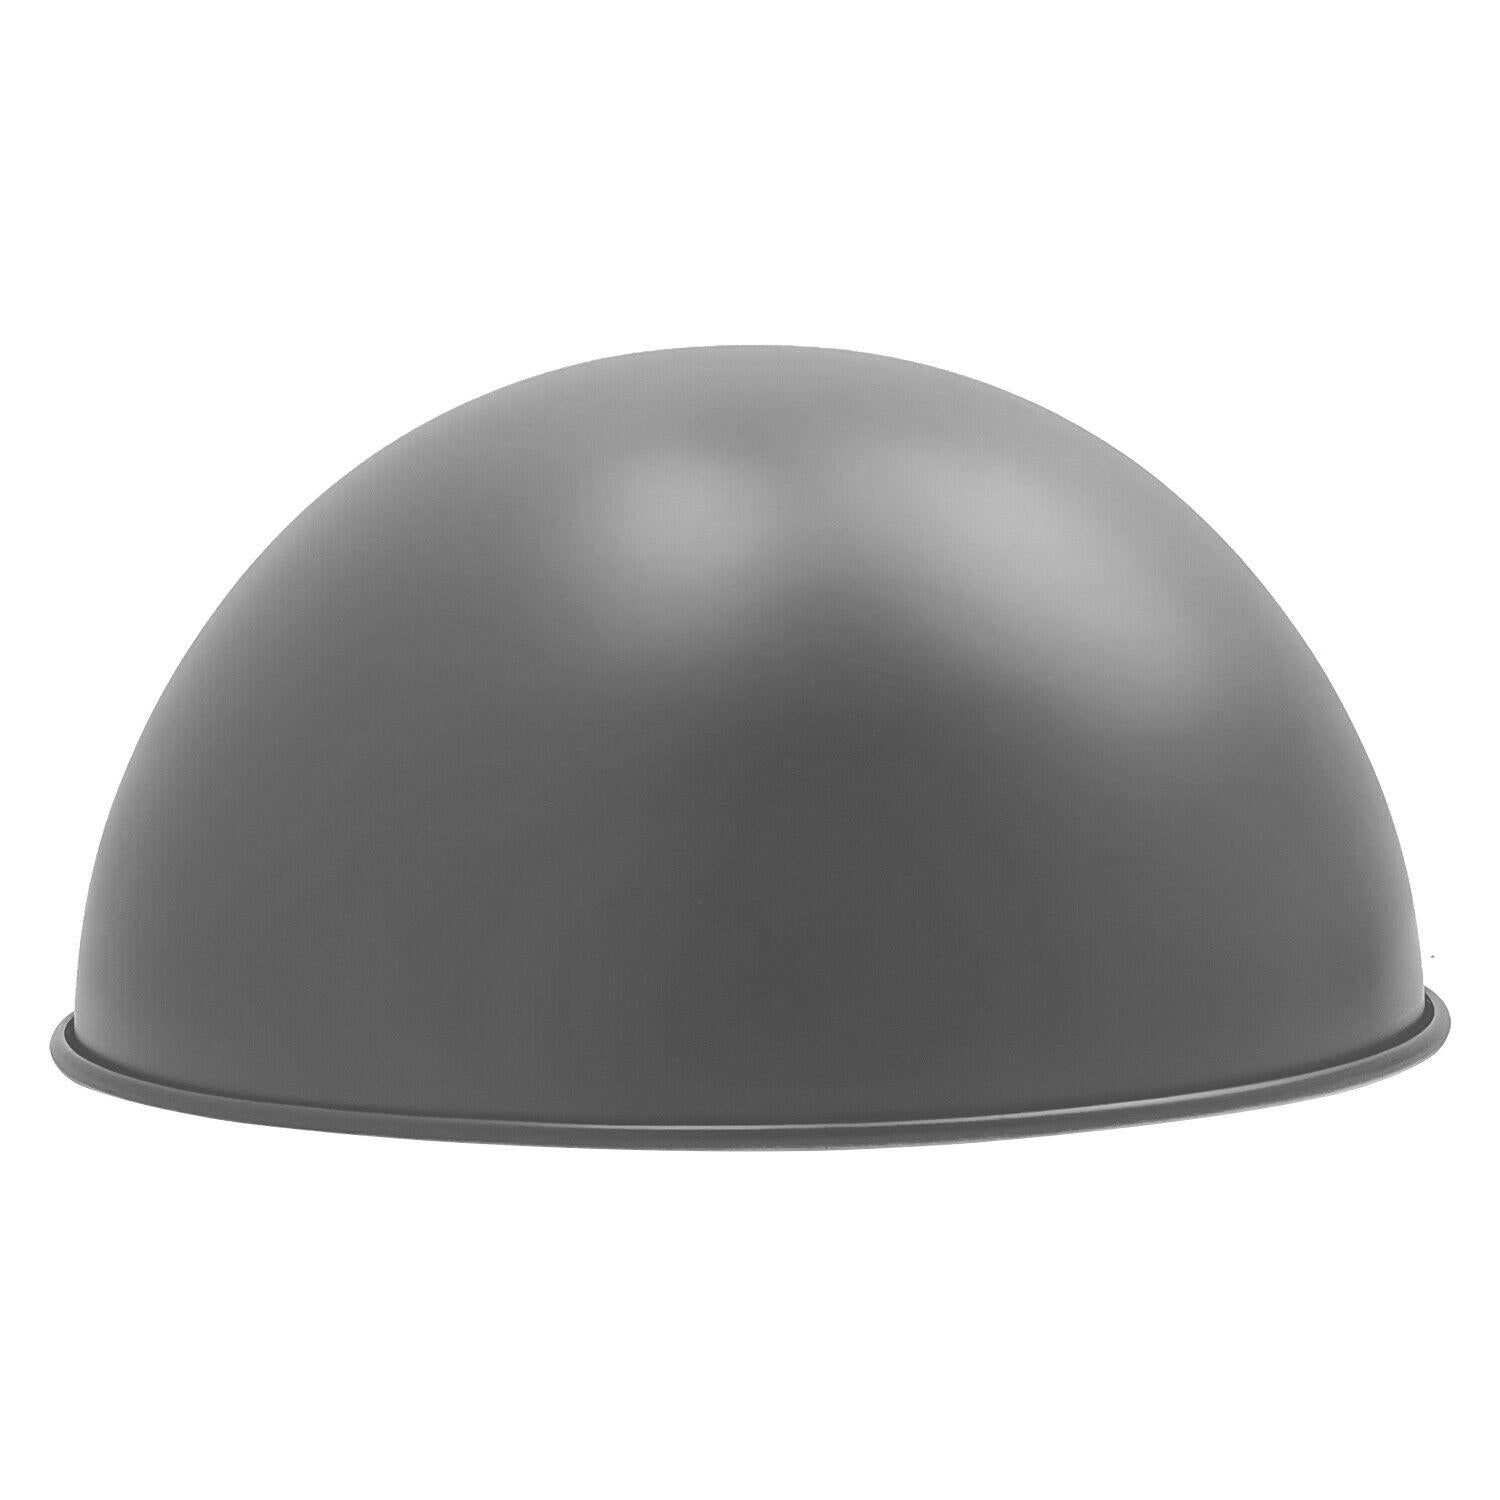 Retro Design Light Easy Fit 40cm Dome Lampshades Lighting~1384 - LEDSone UK Ltd